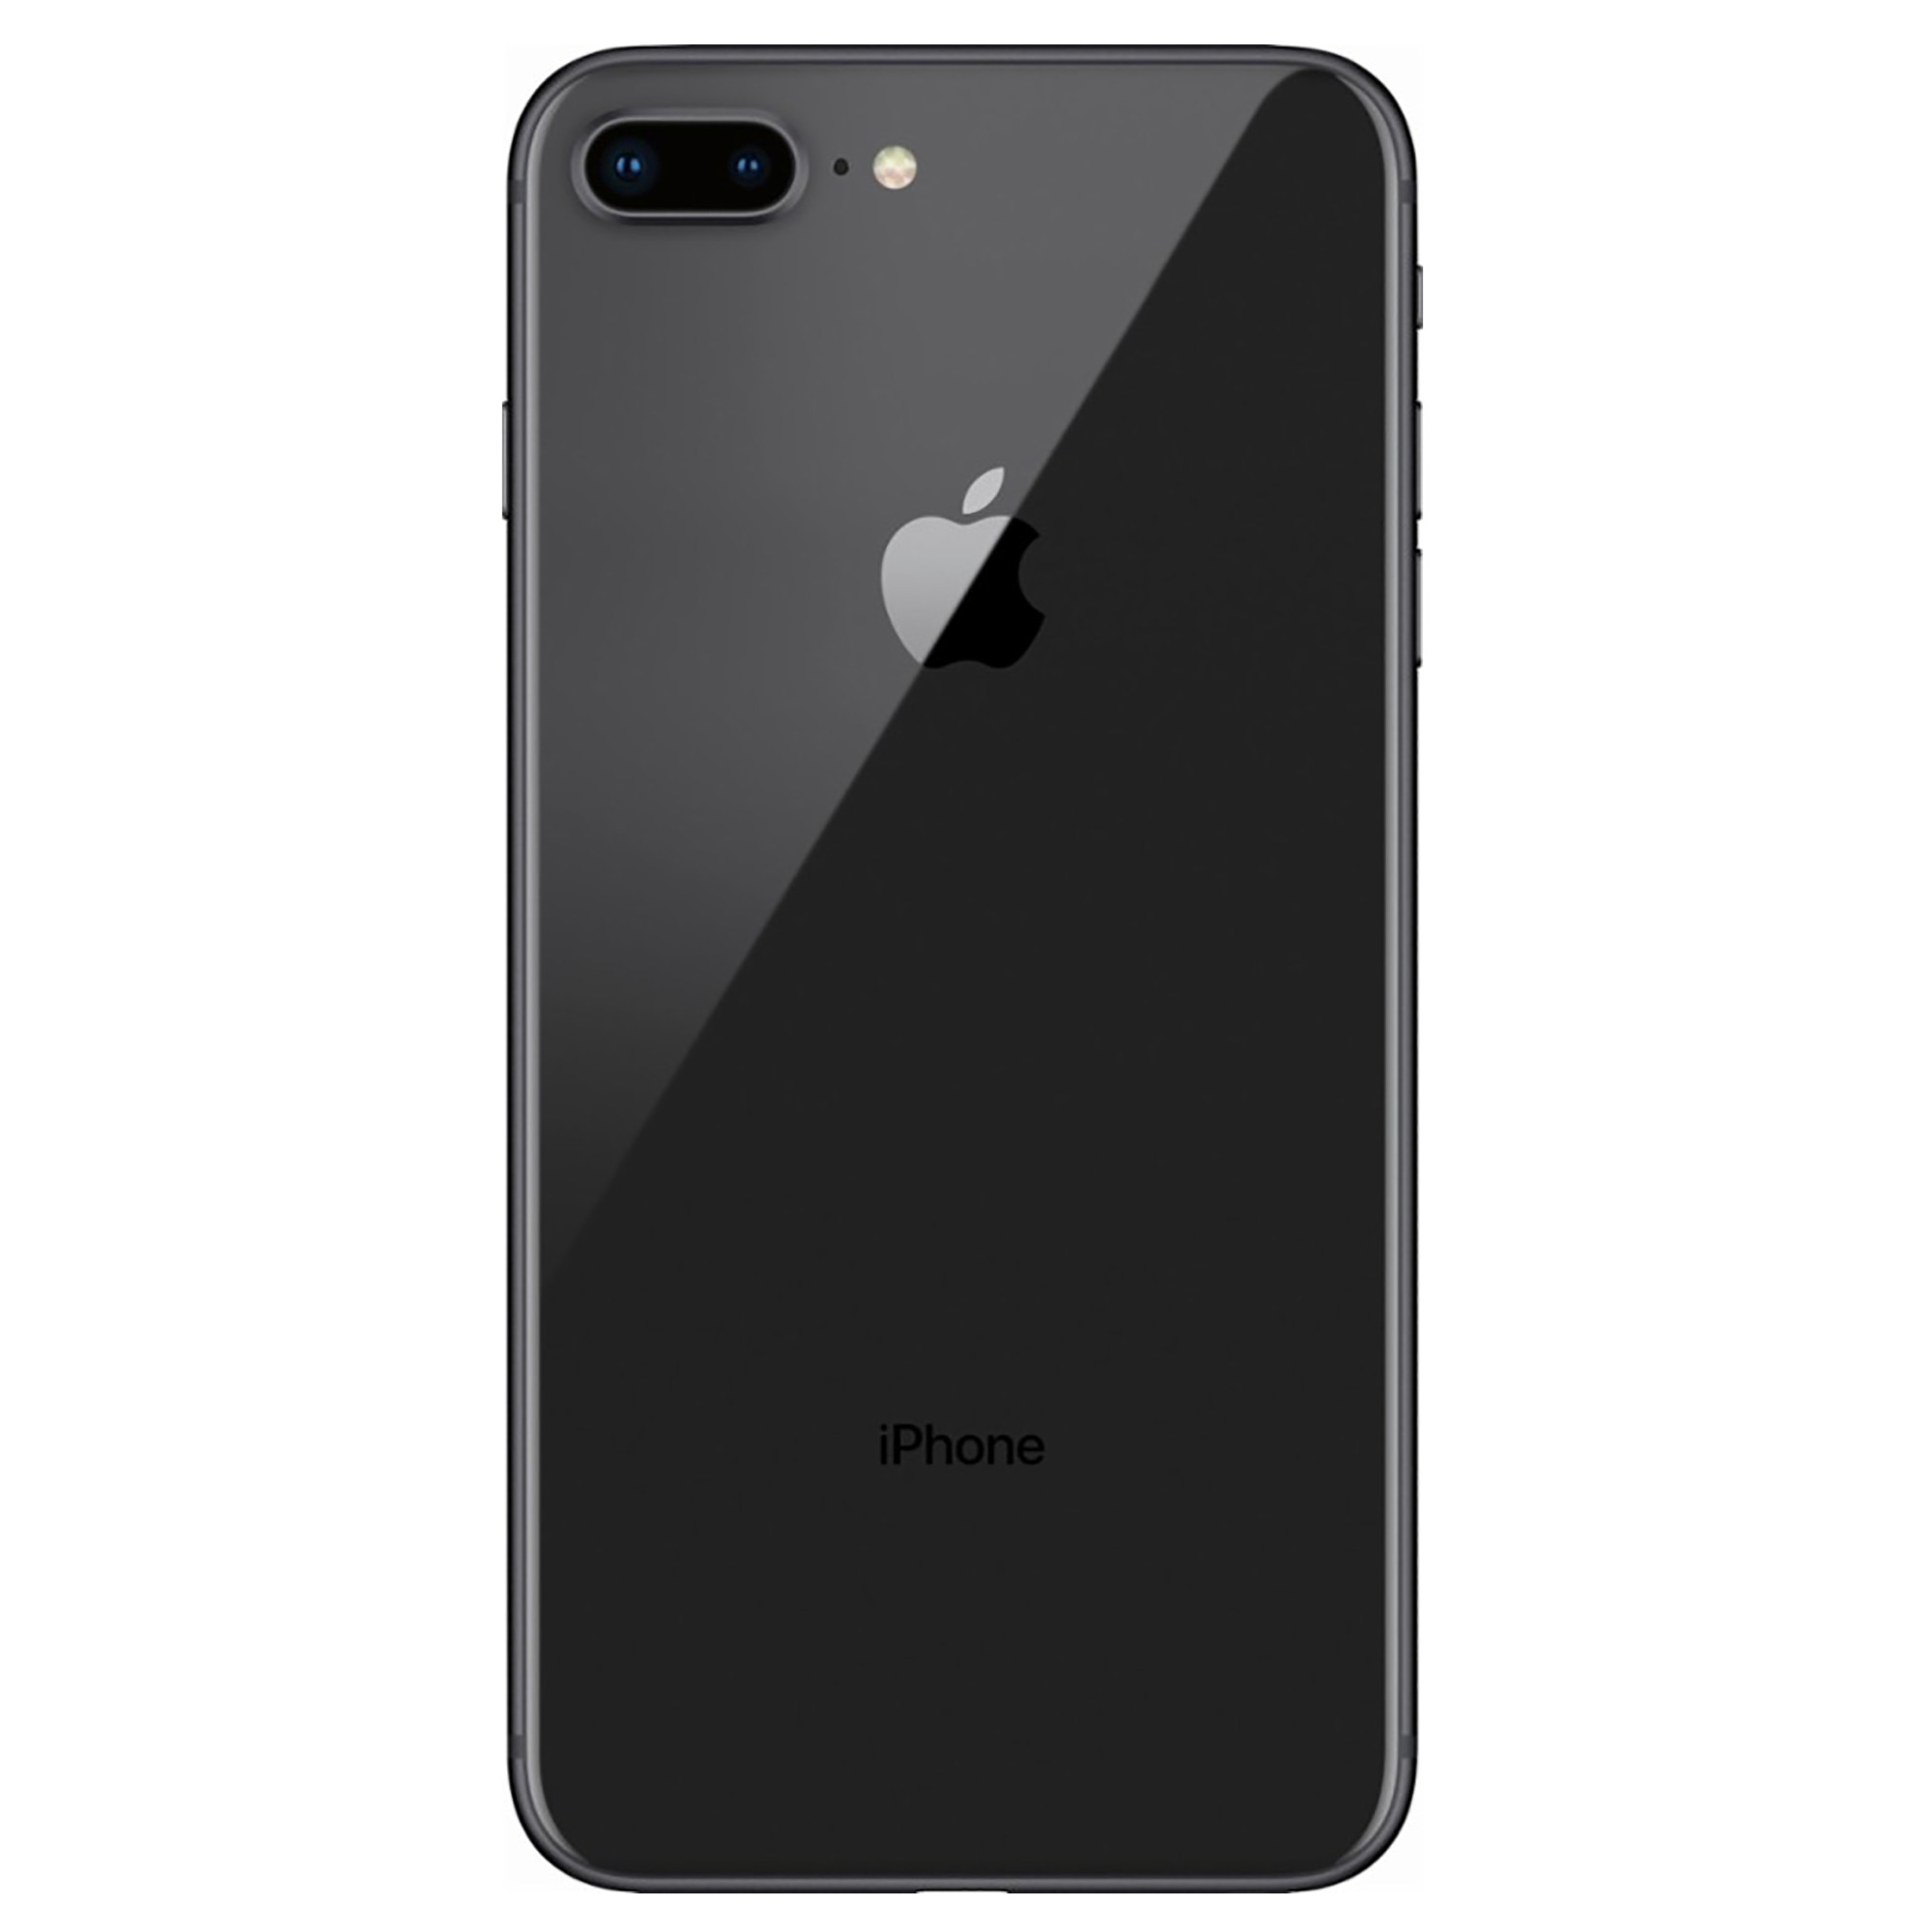 Restored Apple iPhone Plus 64GB, Space Gray Unlocked LTE (Refurbished) 